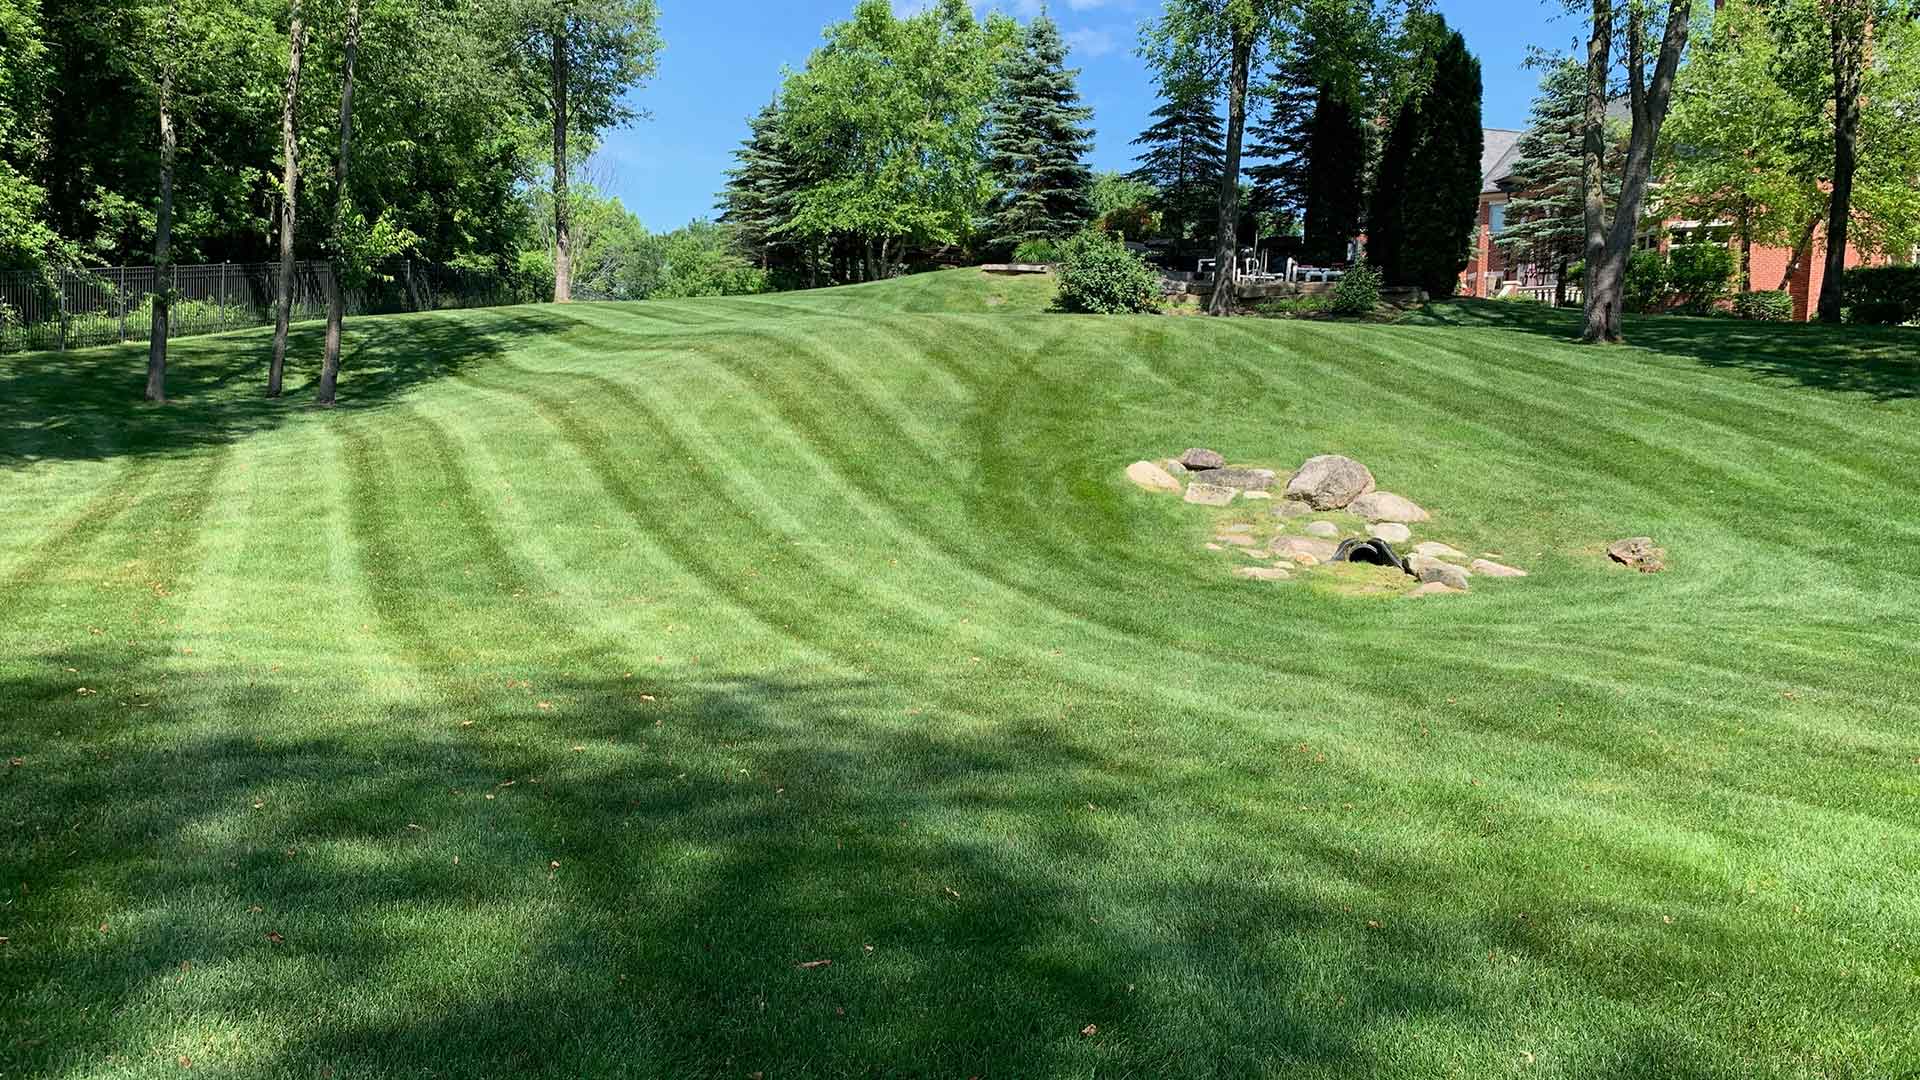 Rolling hills after lawn mowing near Washington, MI.